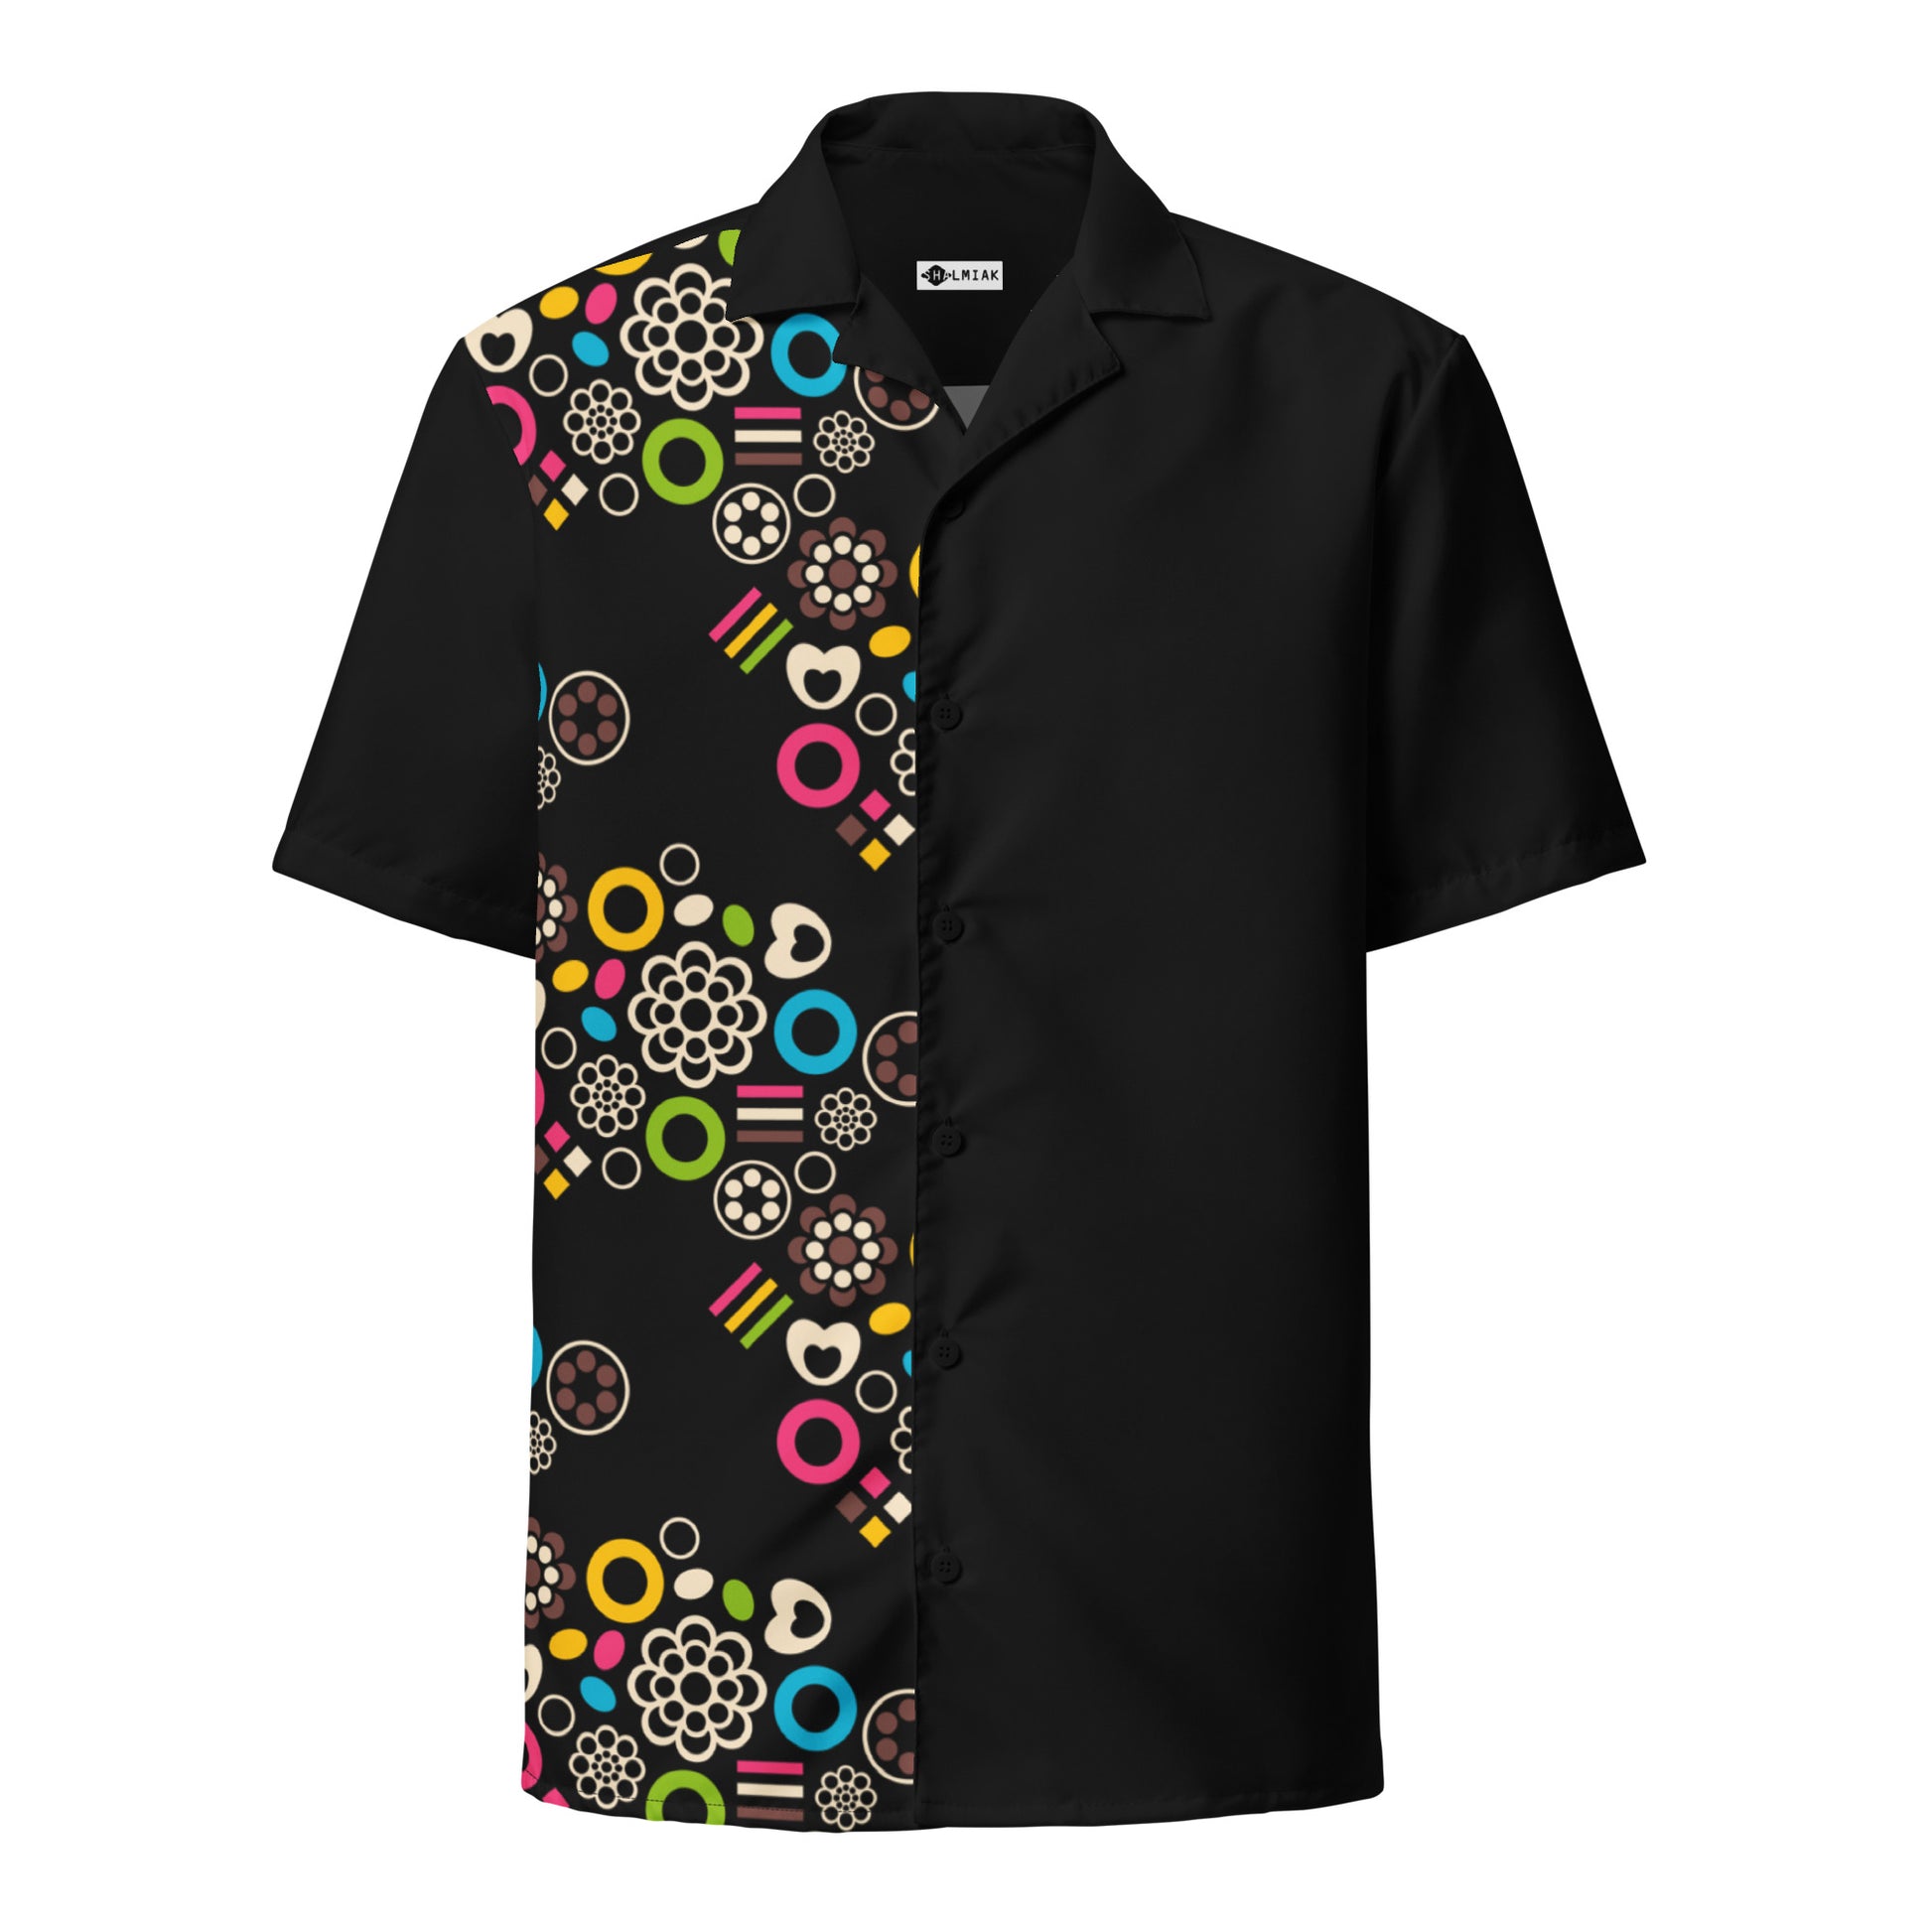 FOREVER SWEET - Unisex button shirt